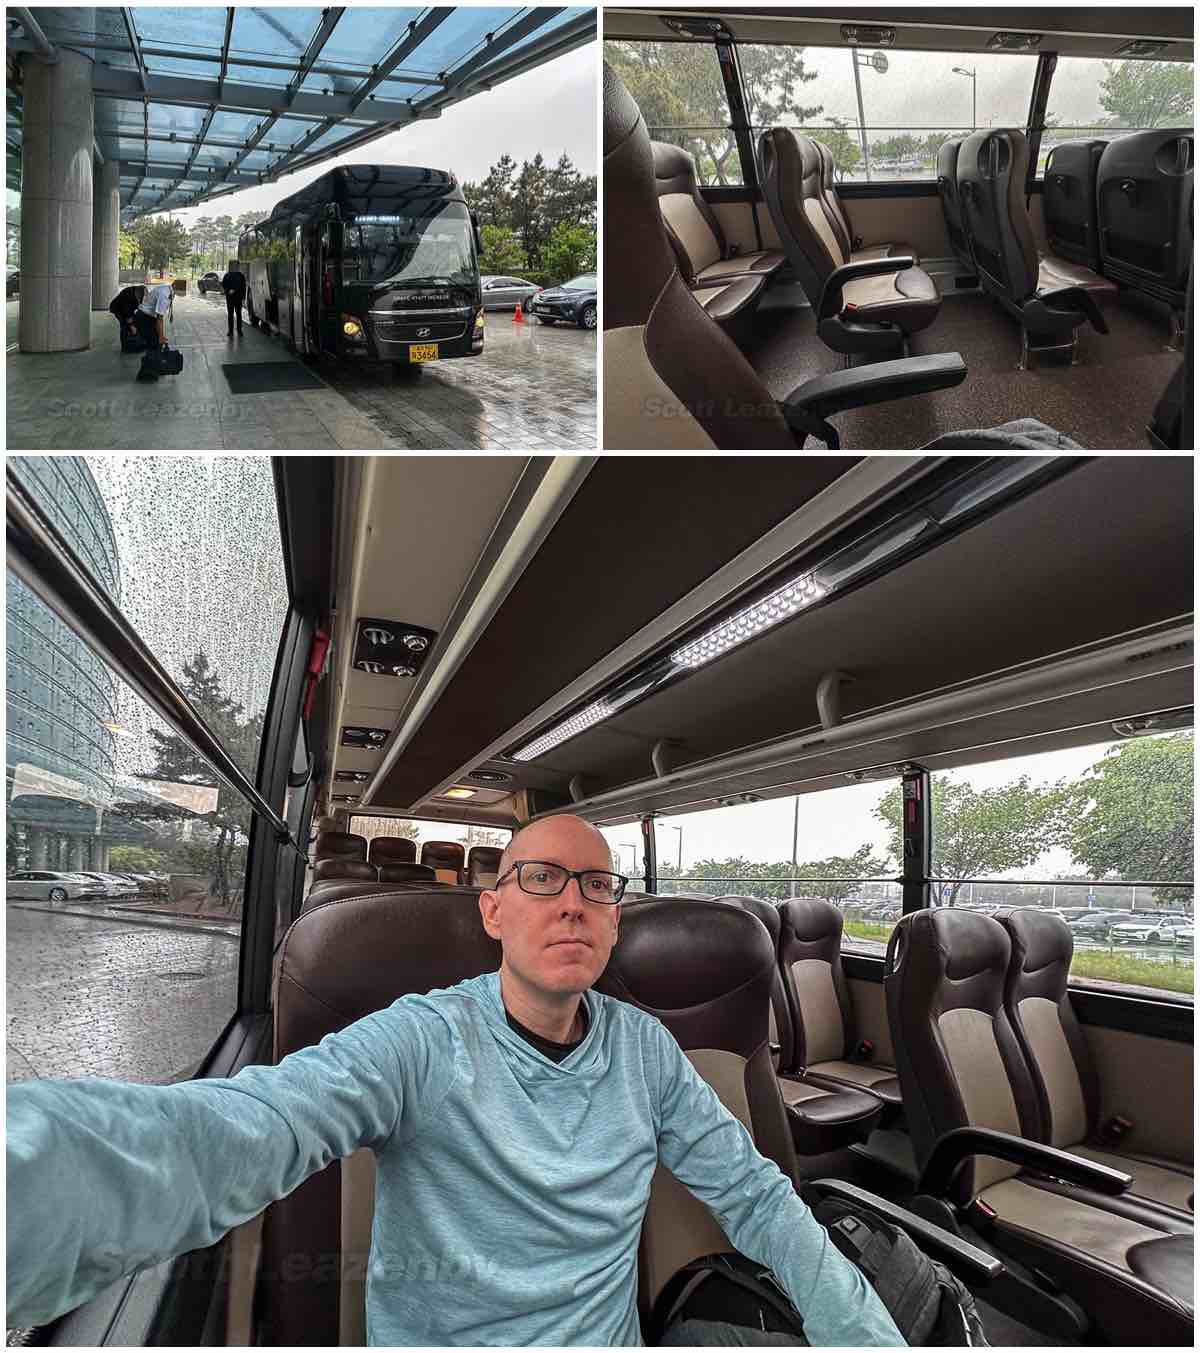 Scott Leazenby riding the Incheon Grand Hyatt Hotel shuttle bus